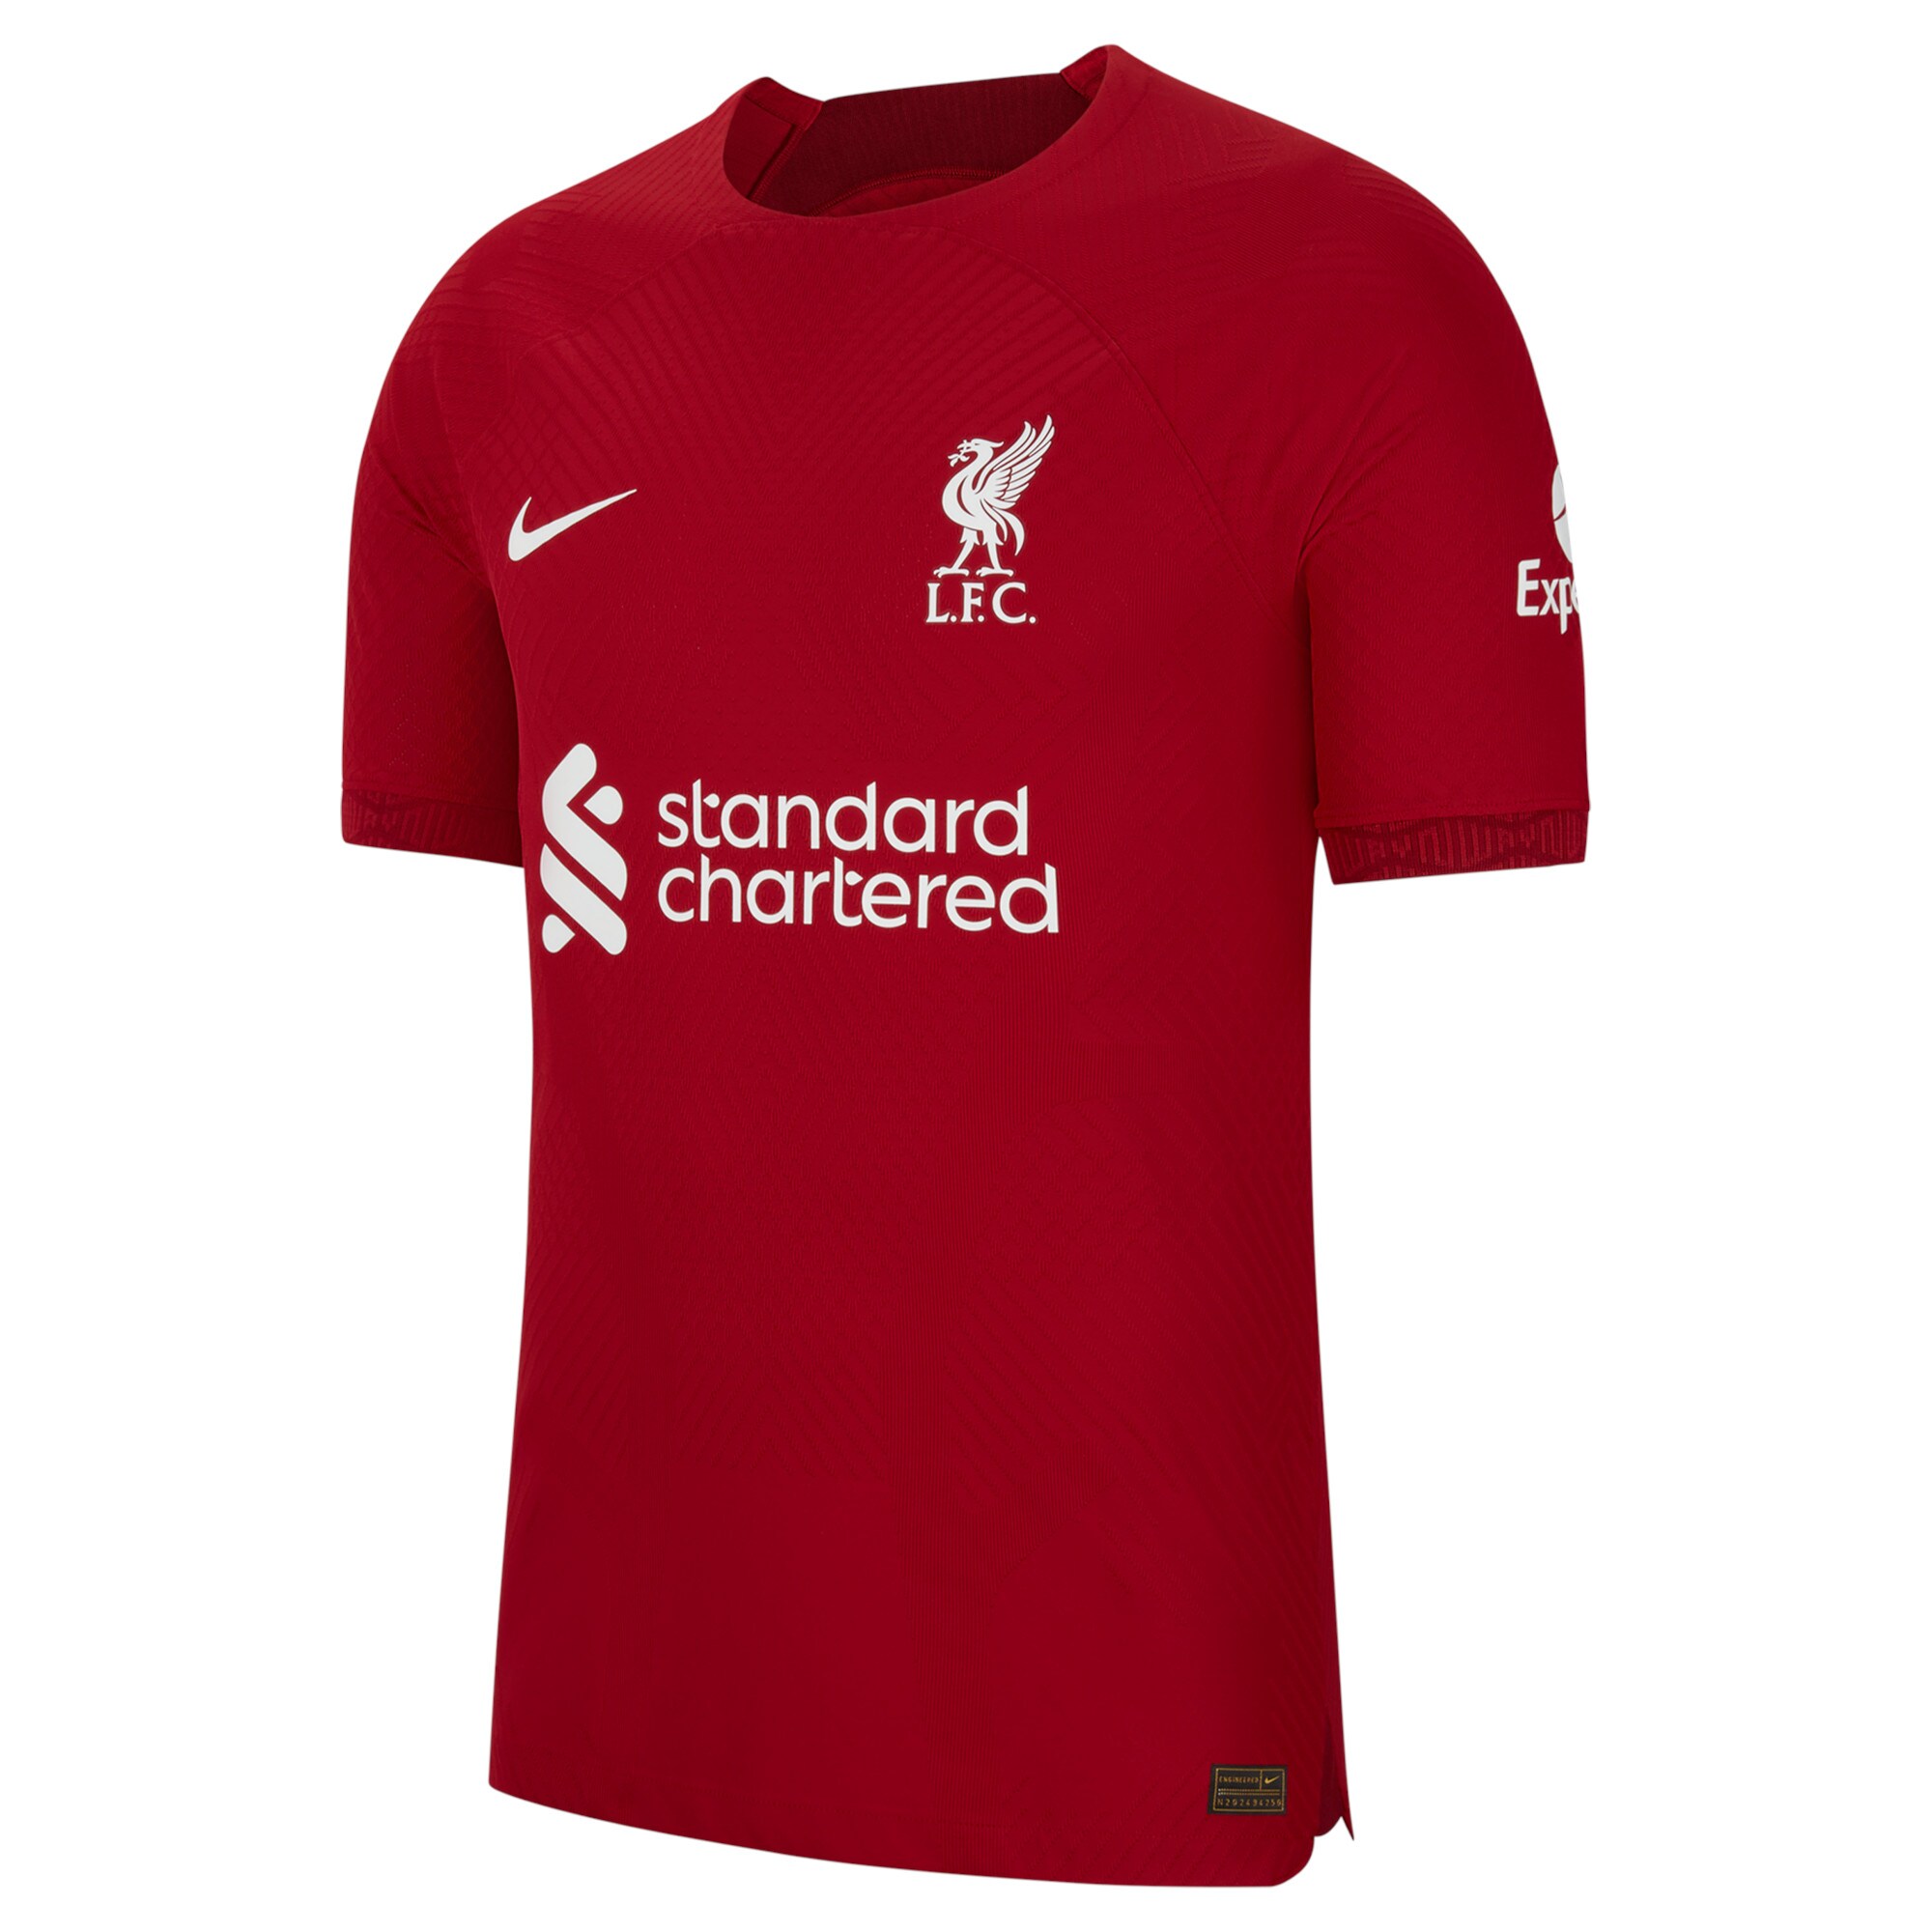 Liverpool Home Vapor Match Shirt 2022-23 with Gakpo 18 printing